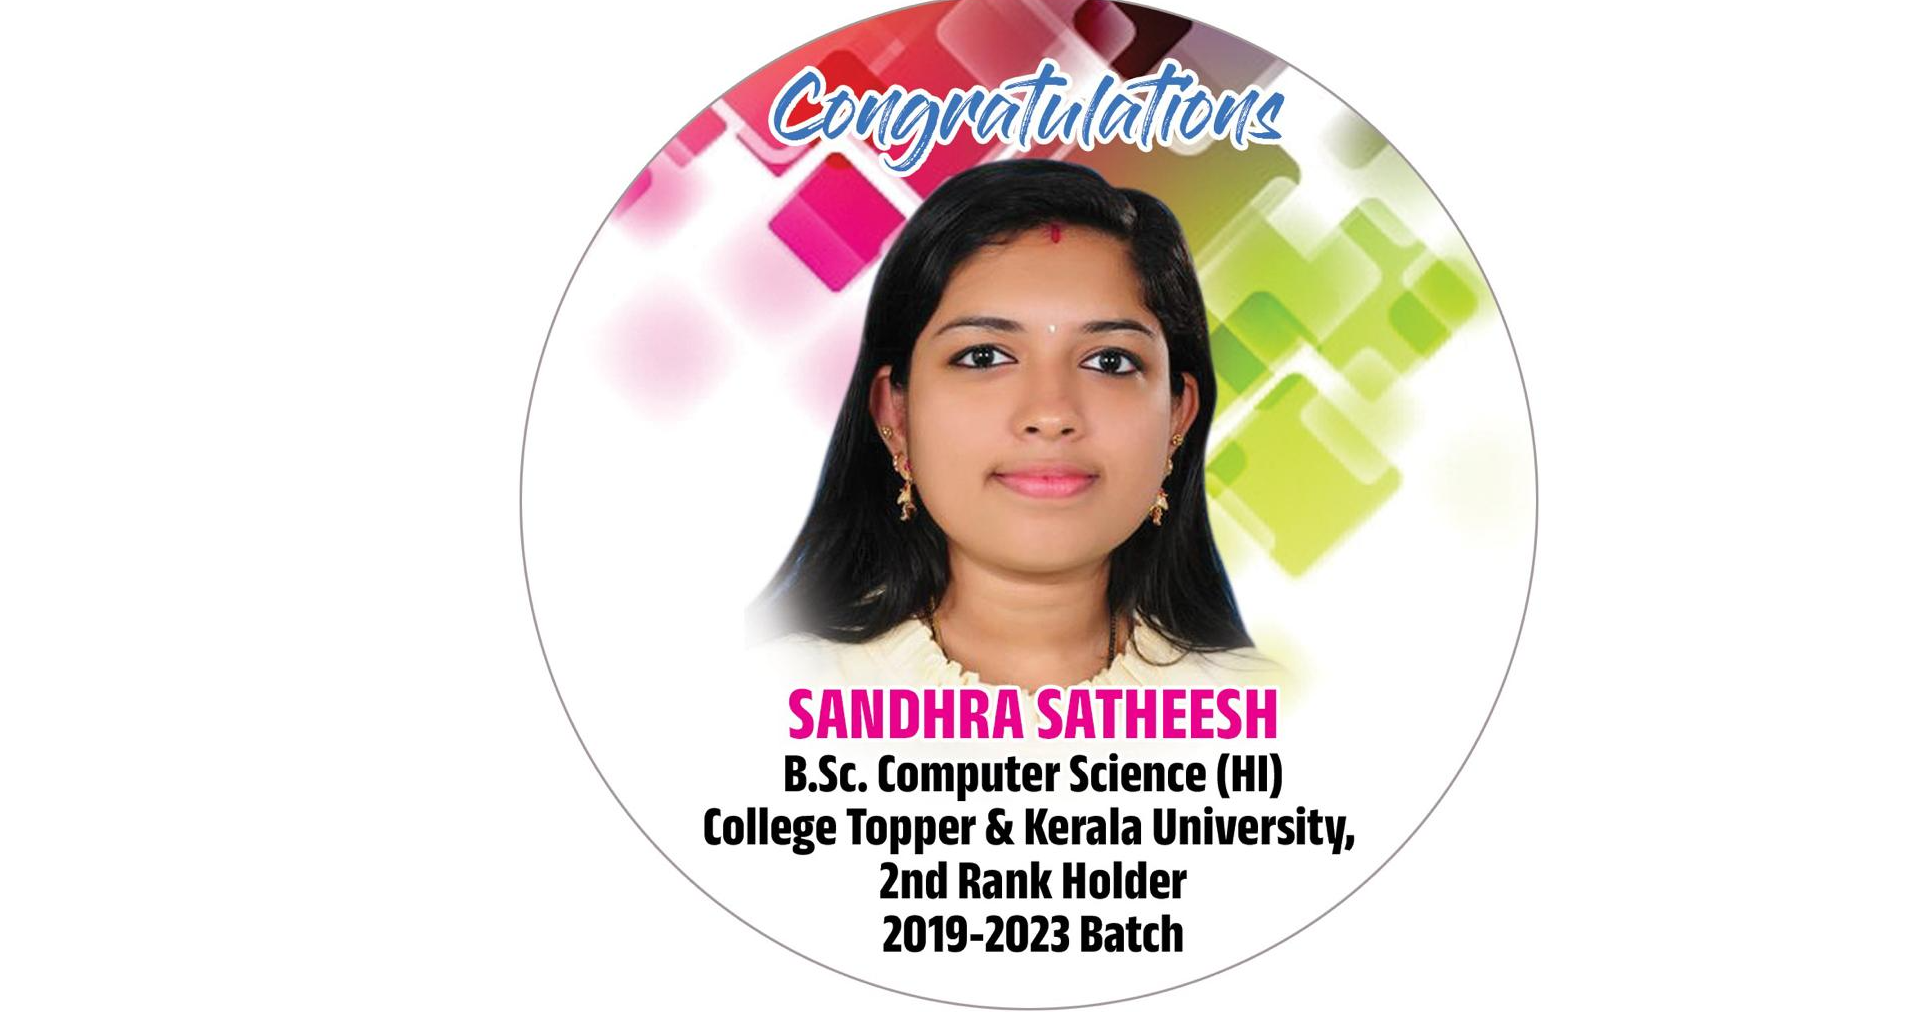 Ms. Sandra Satheesh secured second rank in Kerala University BSc Computer Science Examination